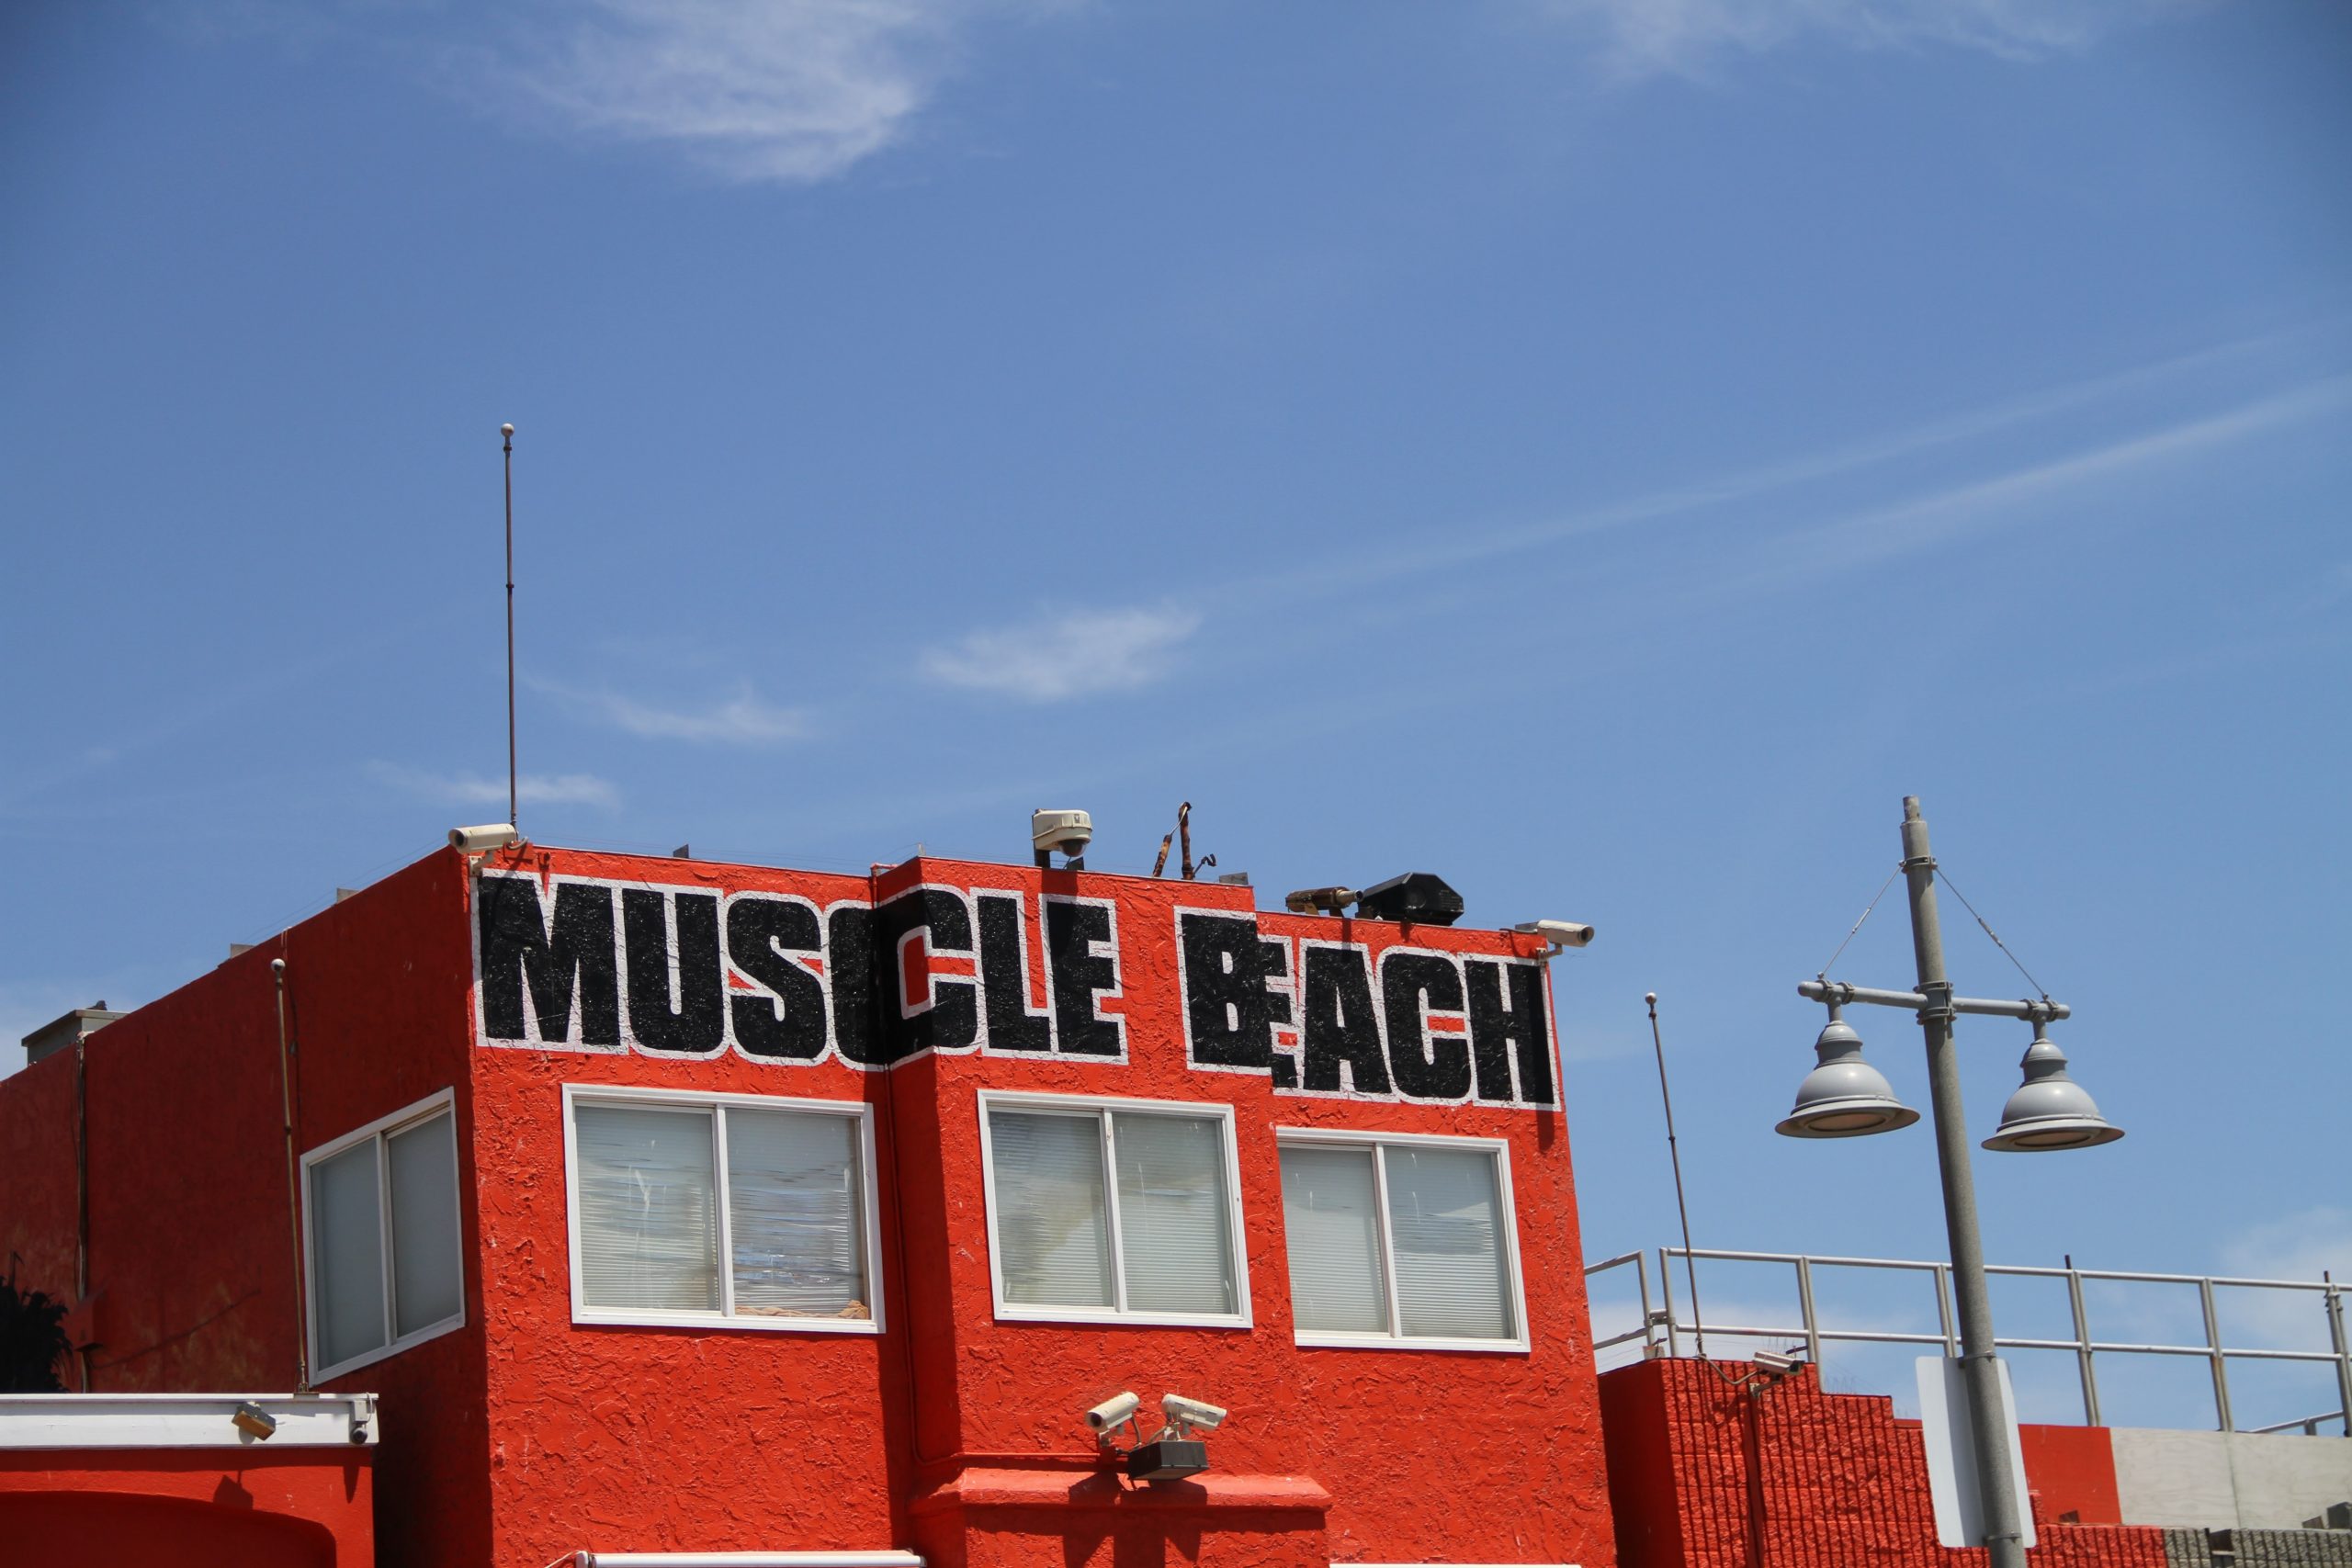 Muscle Beach gym